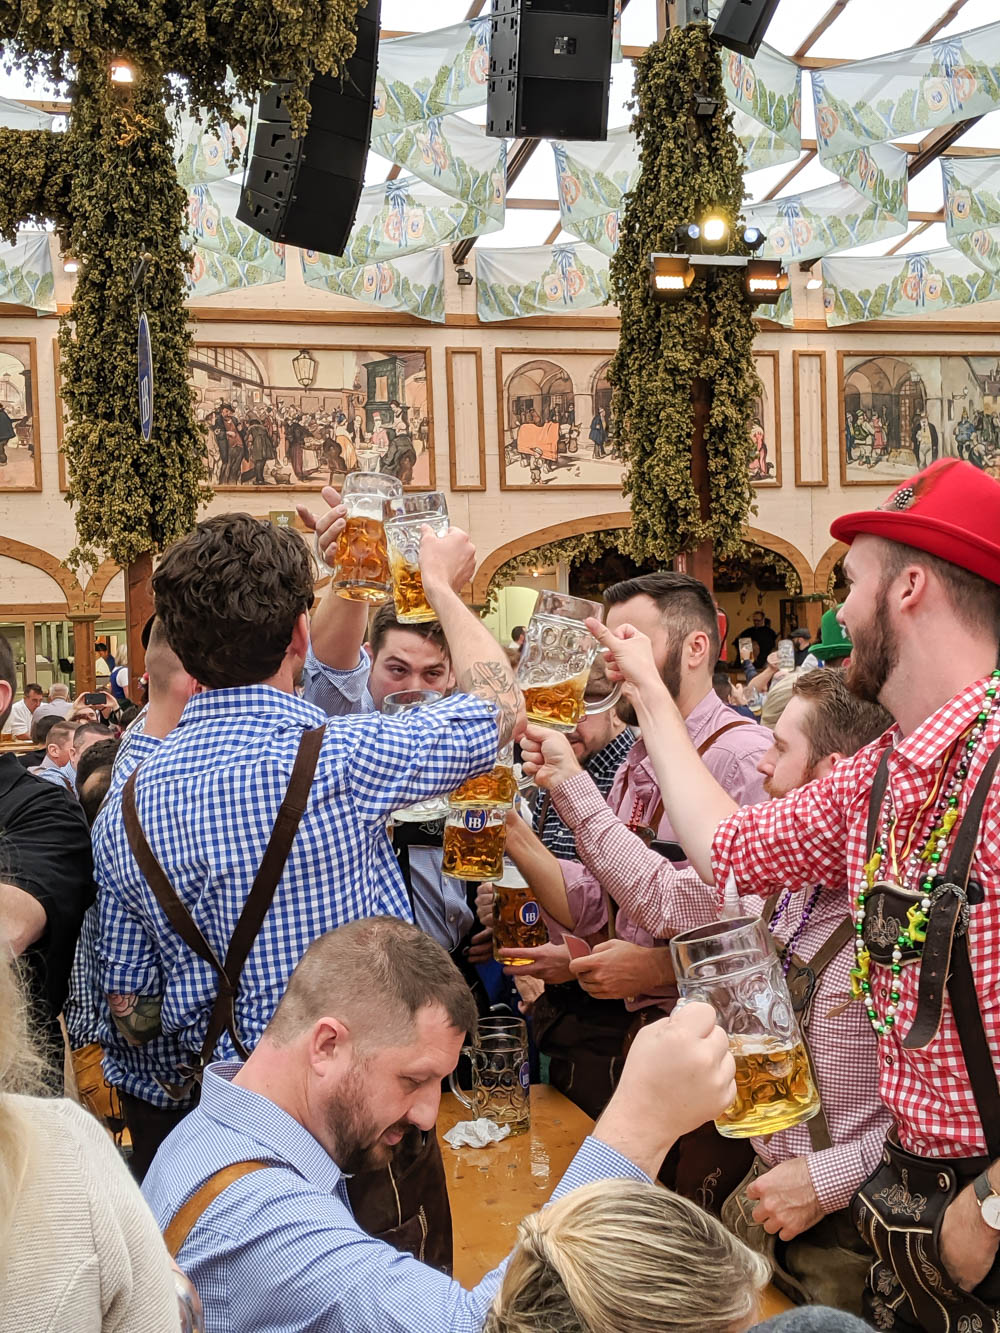 Prosting at hofbrau tent in munich | Best Oktoberfest Games for Fun & Hilarious Backyard Bierfests | Games like Hammerschlagen, Masskrugstemmen, pretzel-eating contests, stein-carrying races, and more